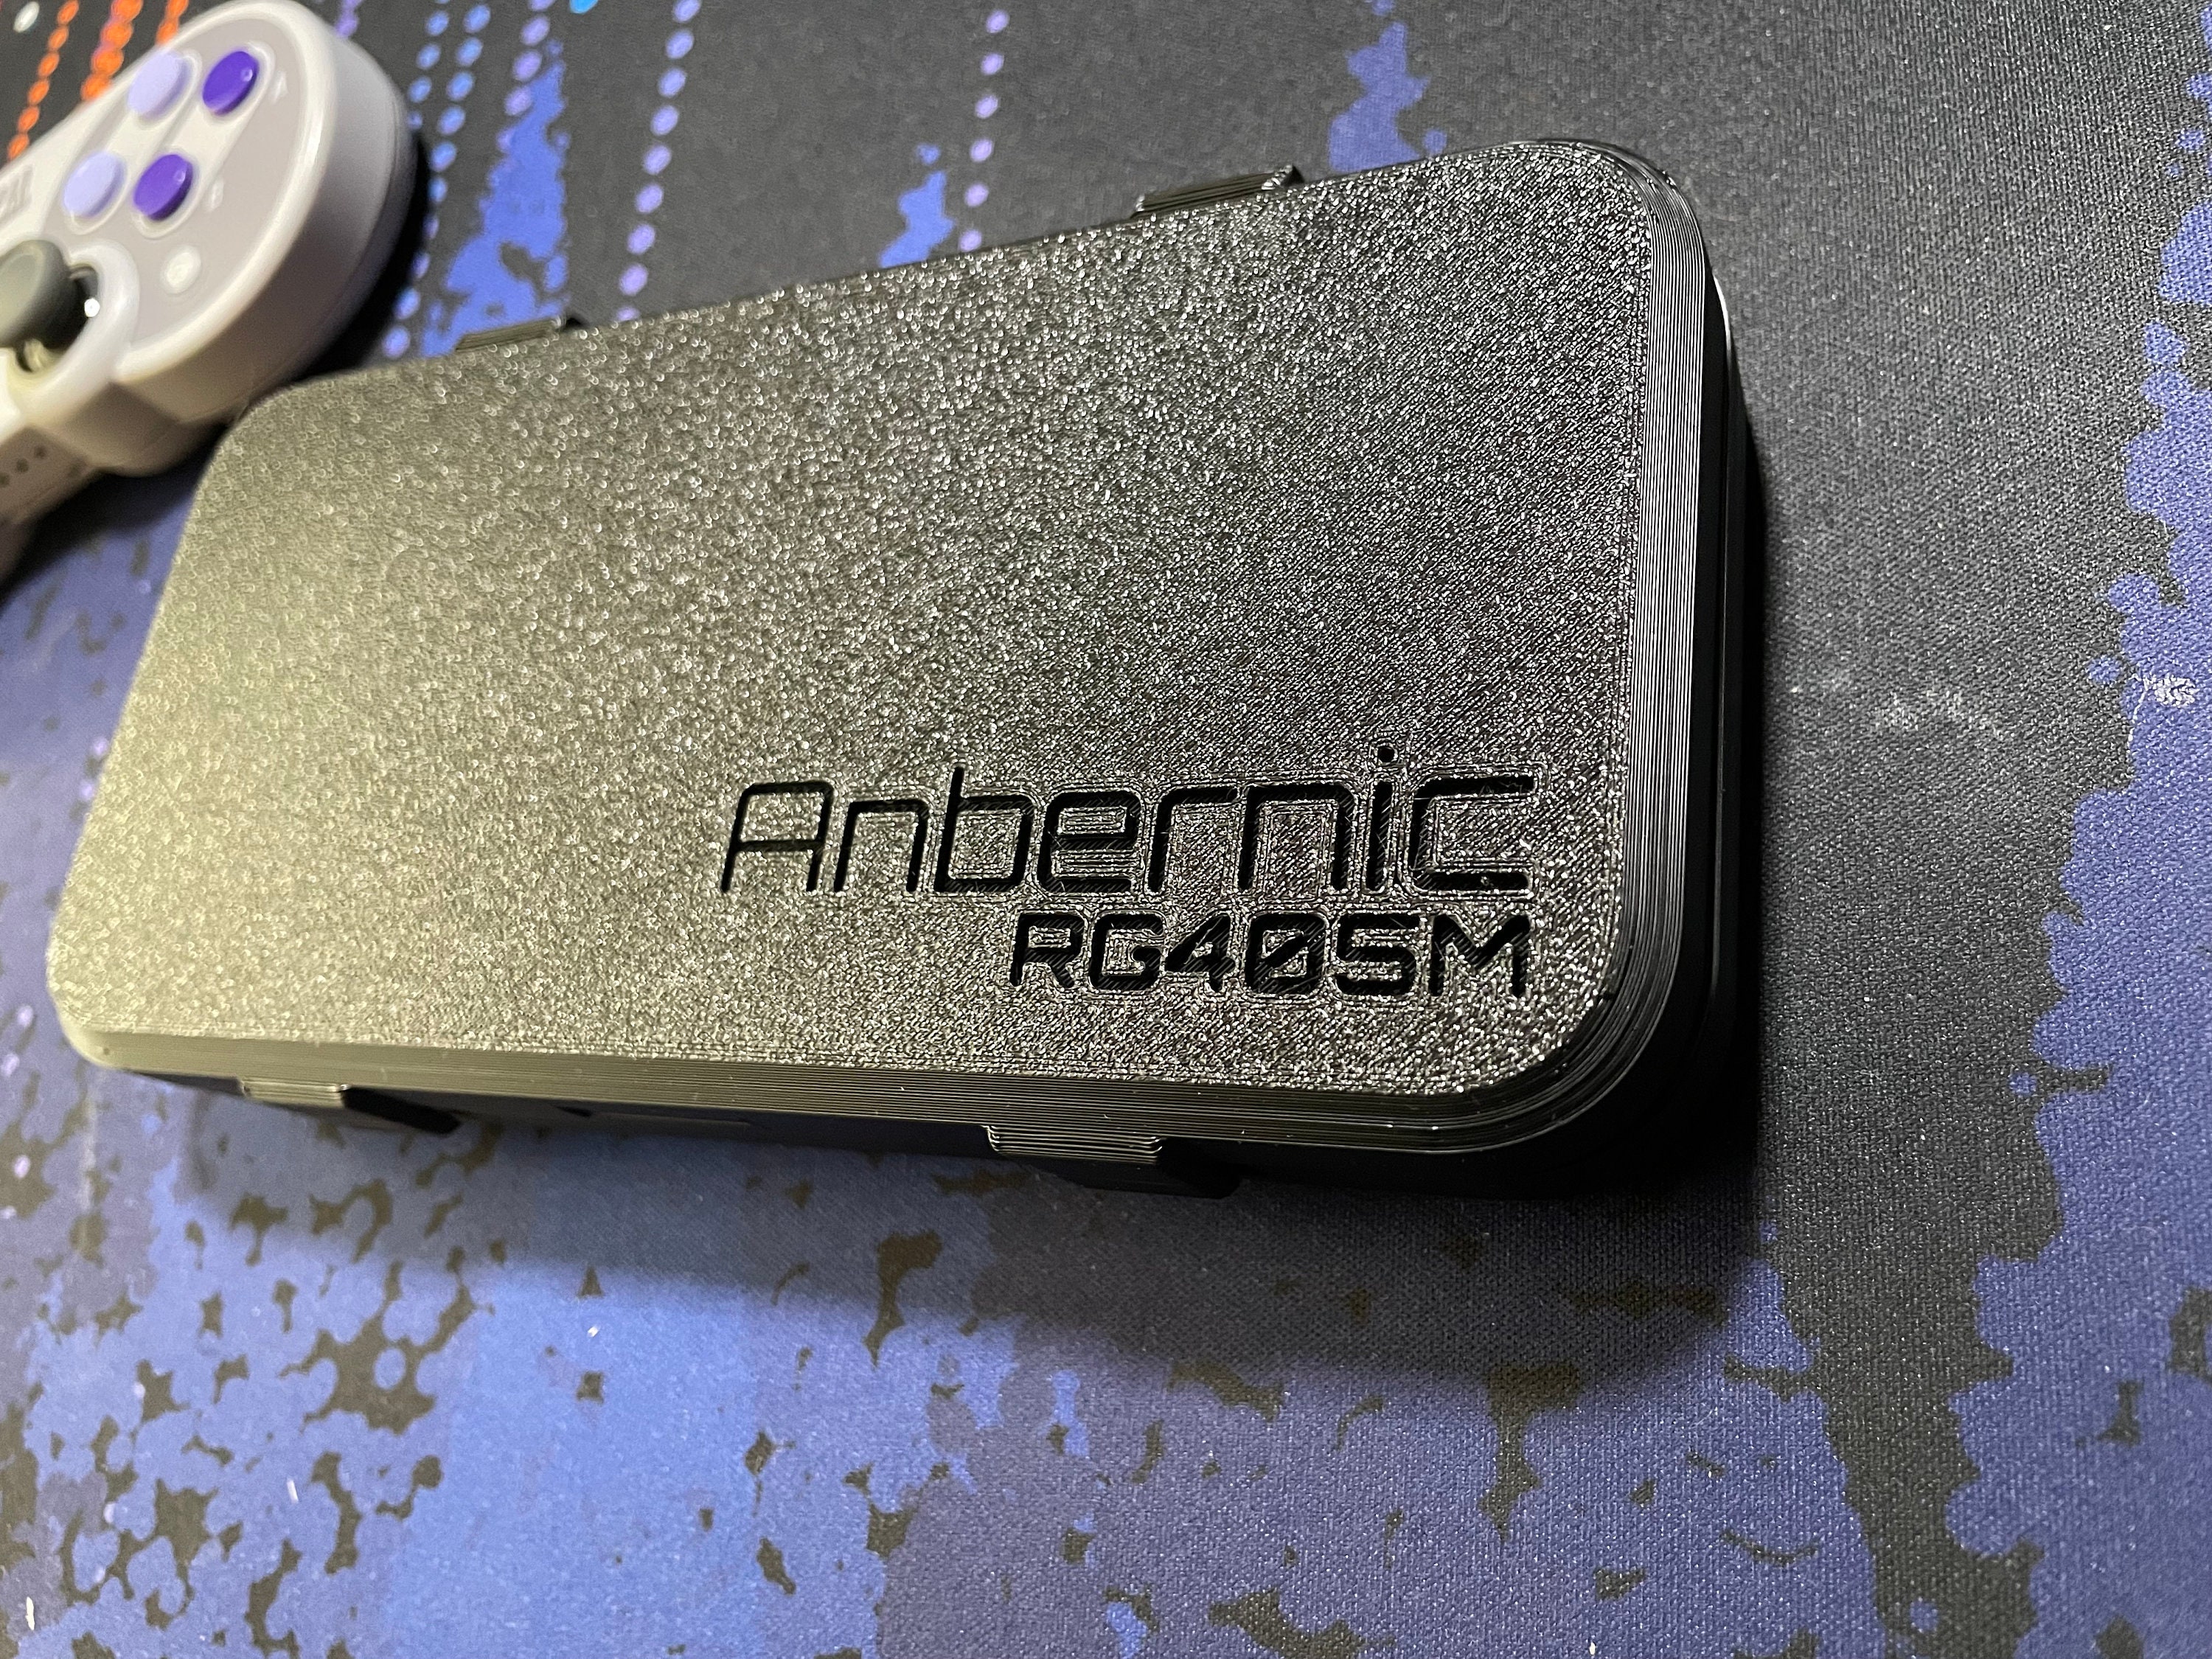 Anbernic Rg405m Case -  Hong Kong